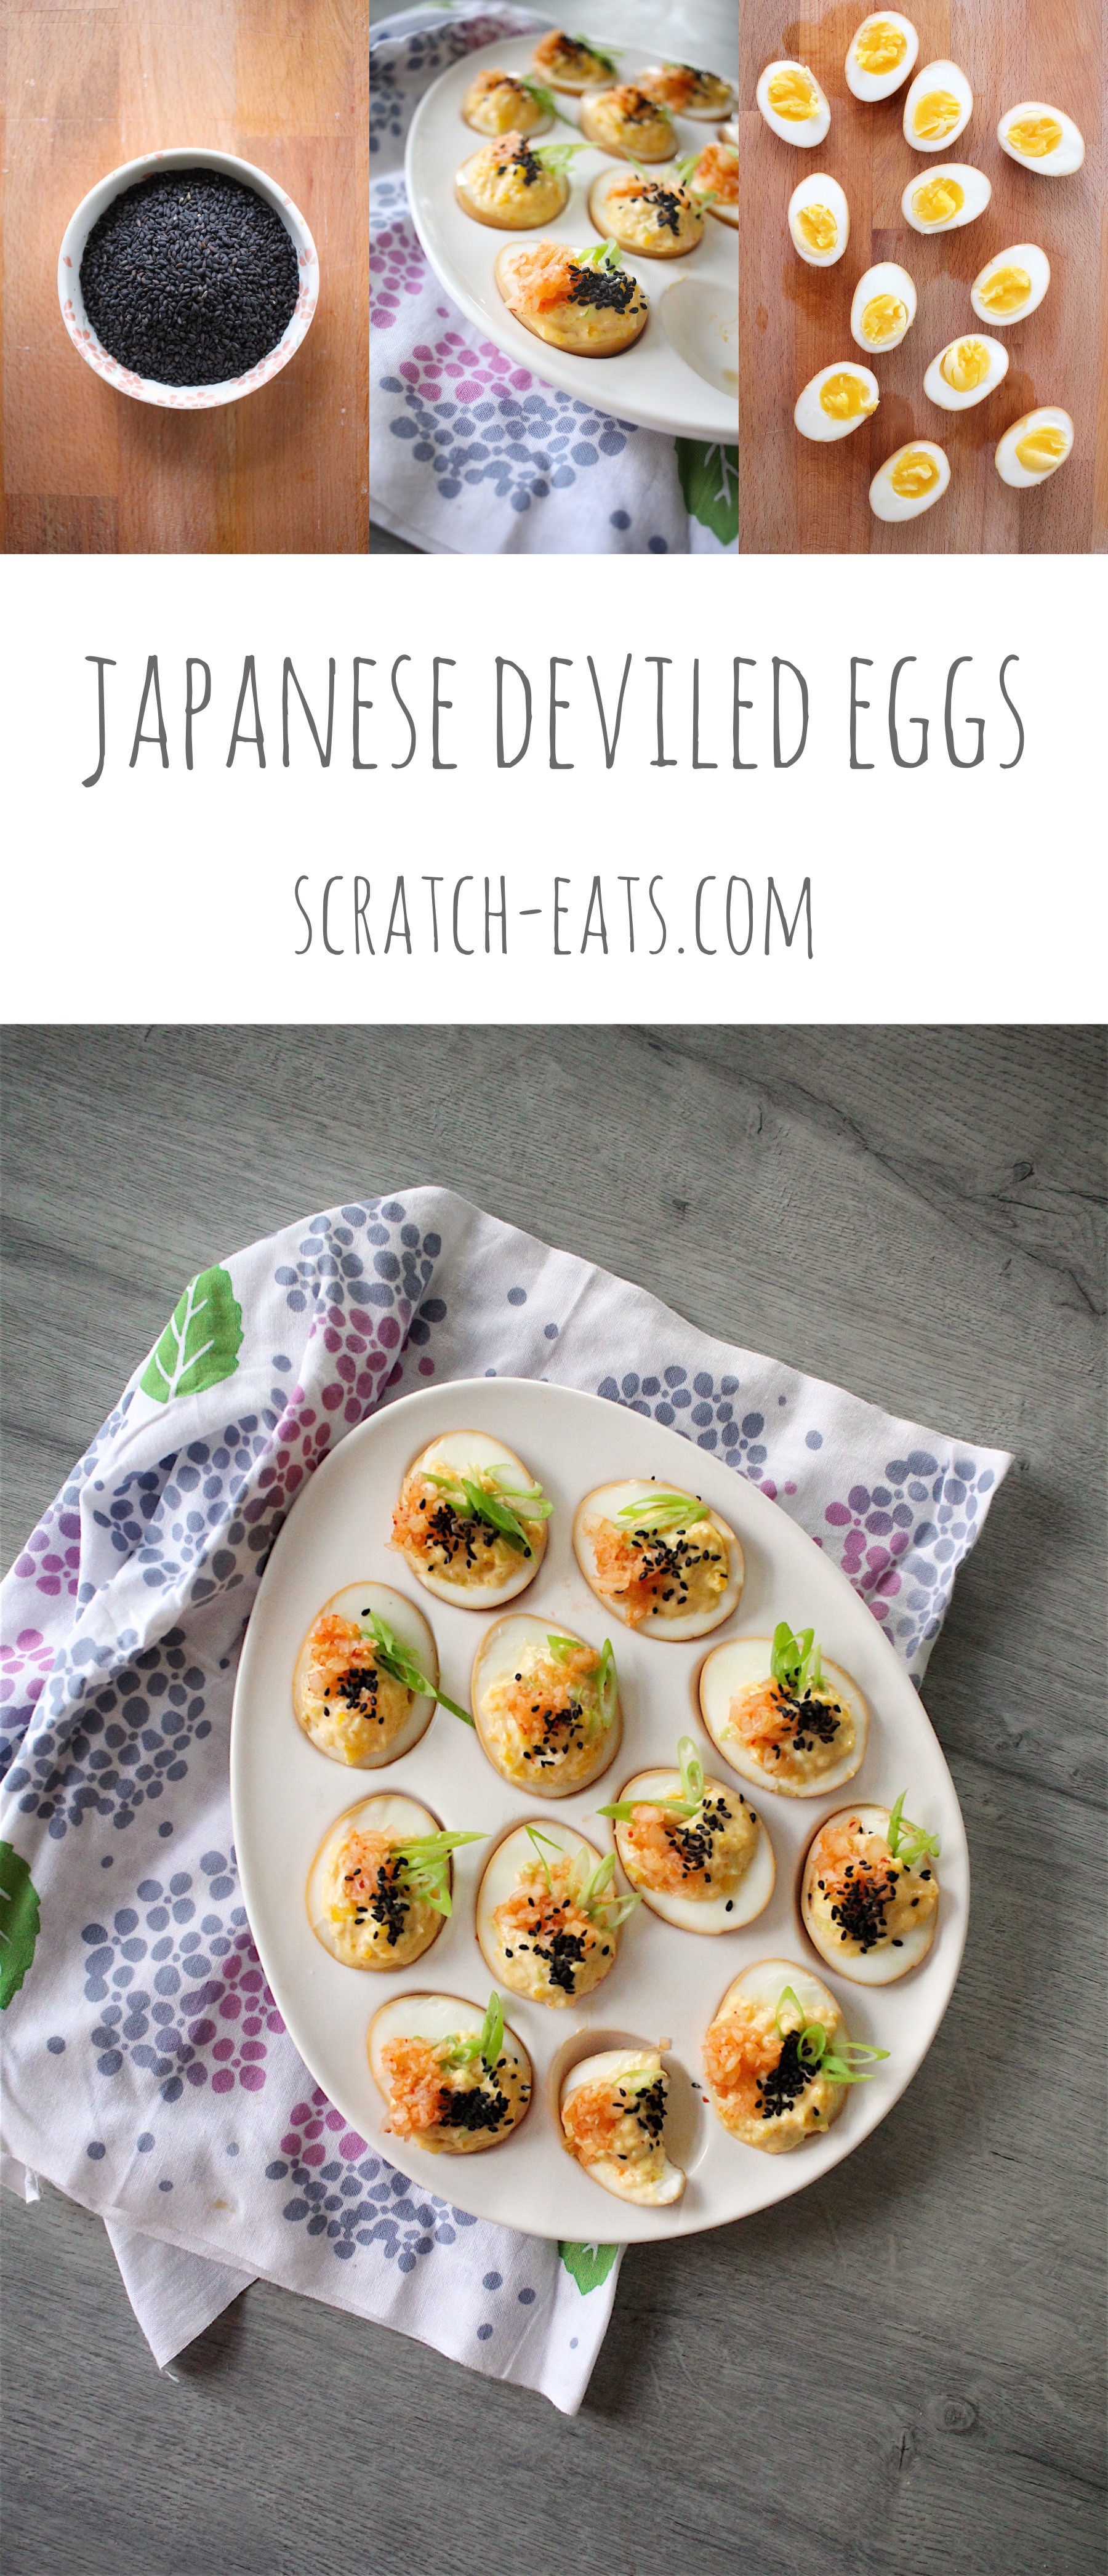 Japanese Deviled Eggs - Scratch Eats